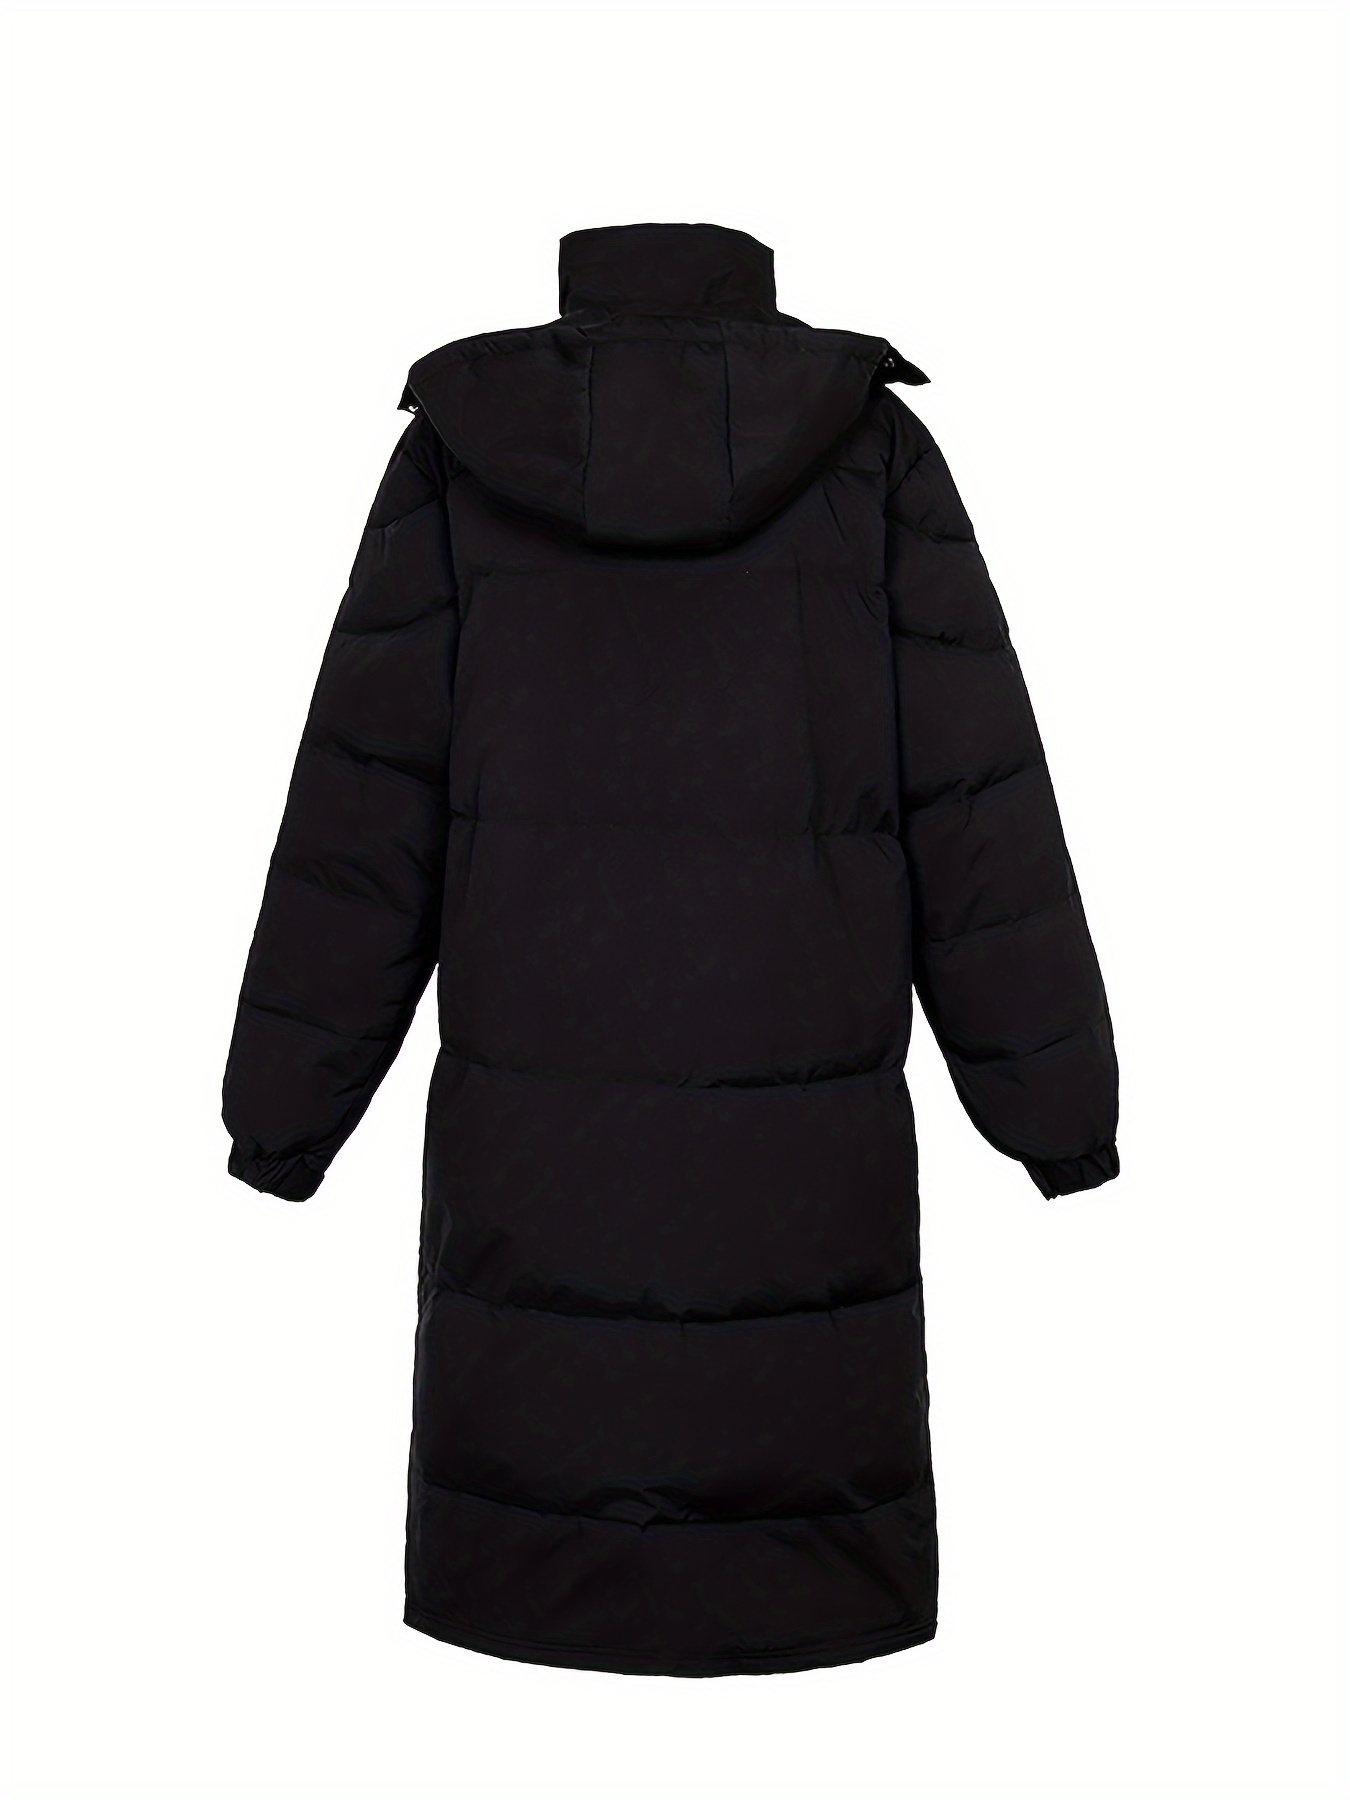 ANOTHER CHOICE Winter Coats For Women Warm Womens Winter Coats